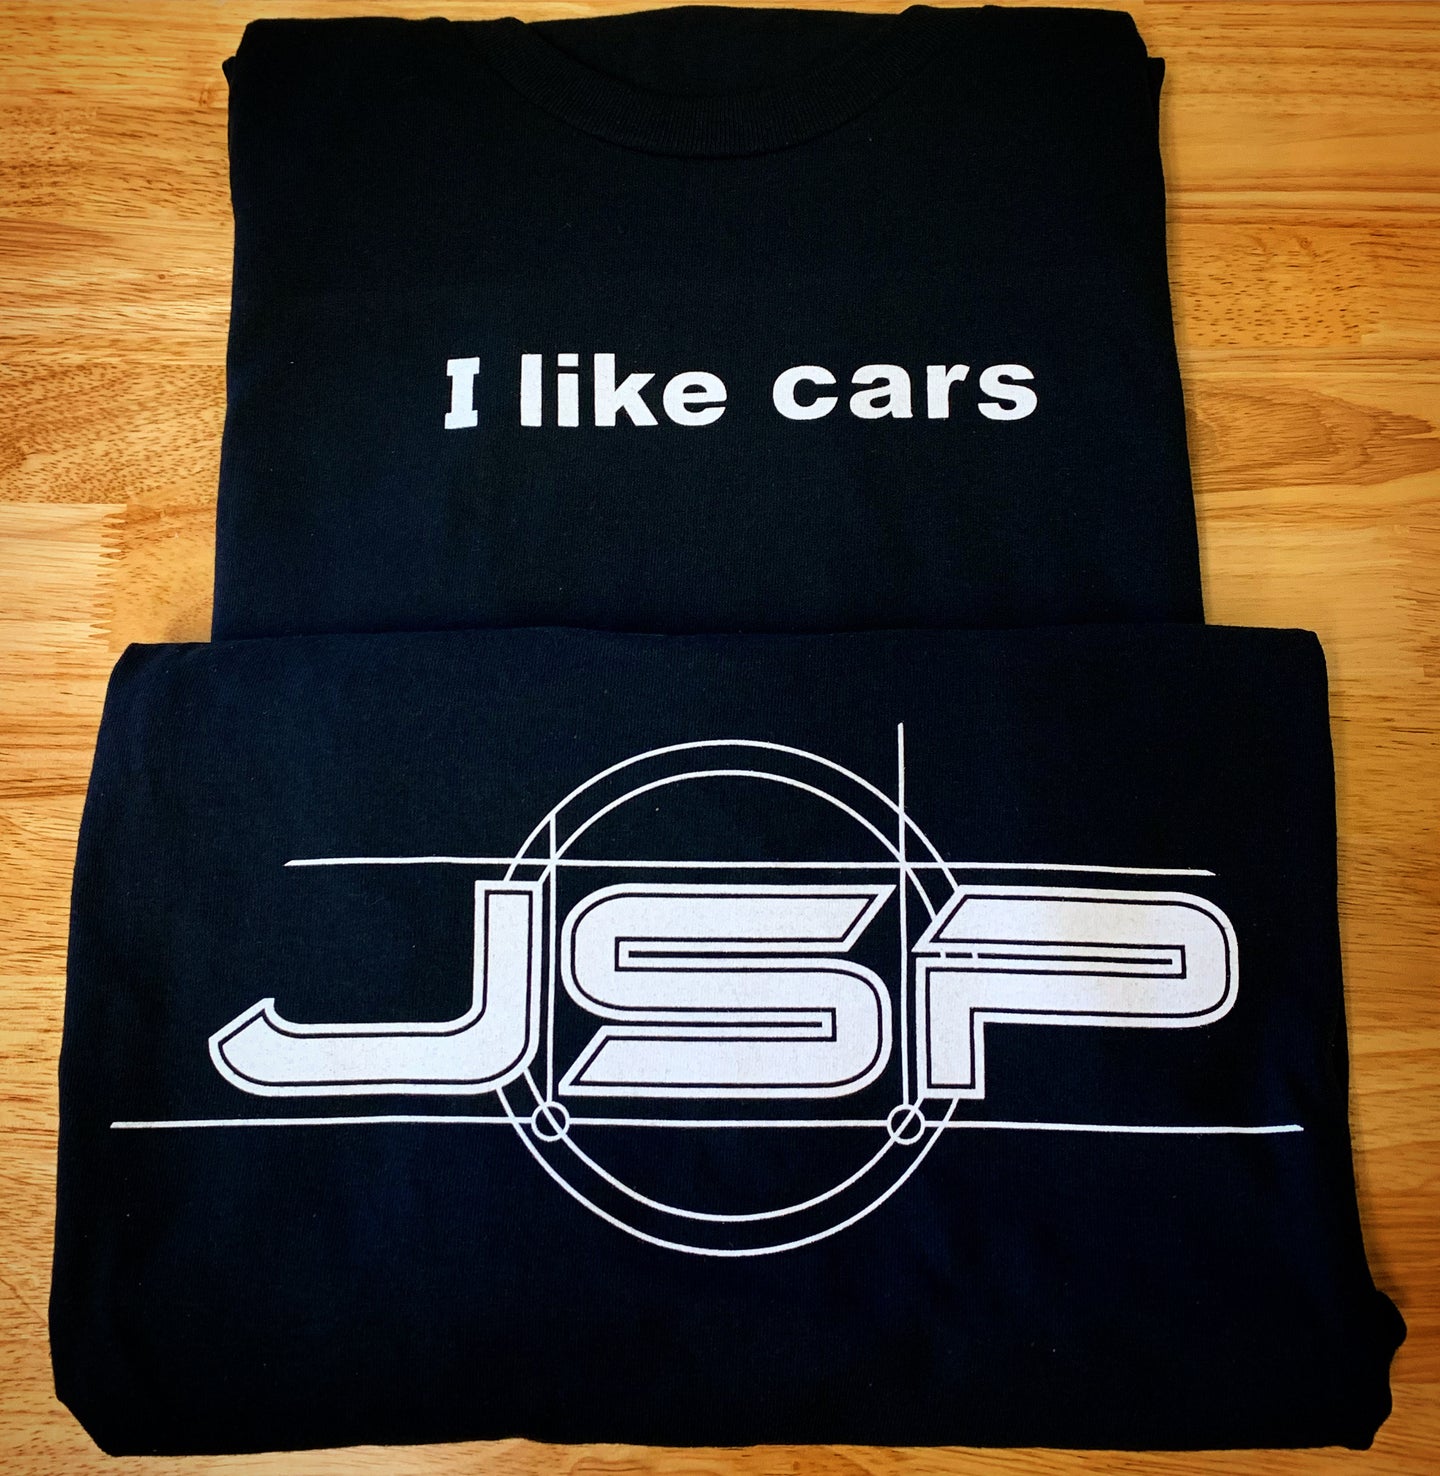 JSP “I like cars” T-shirt